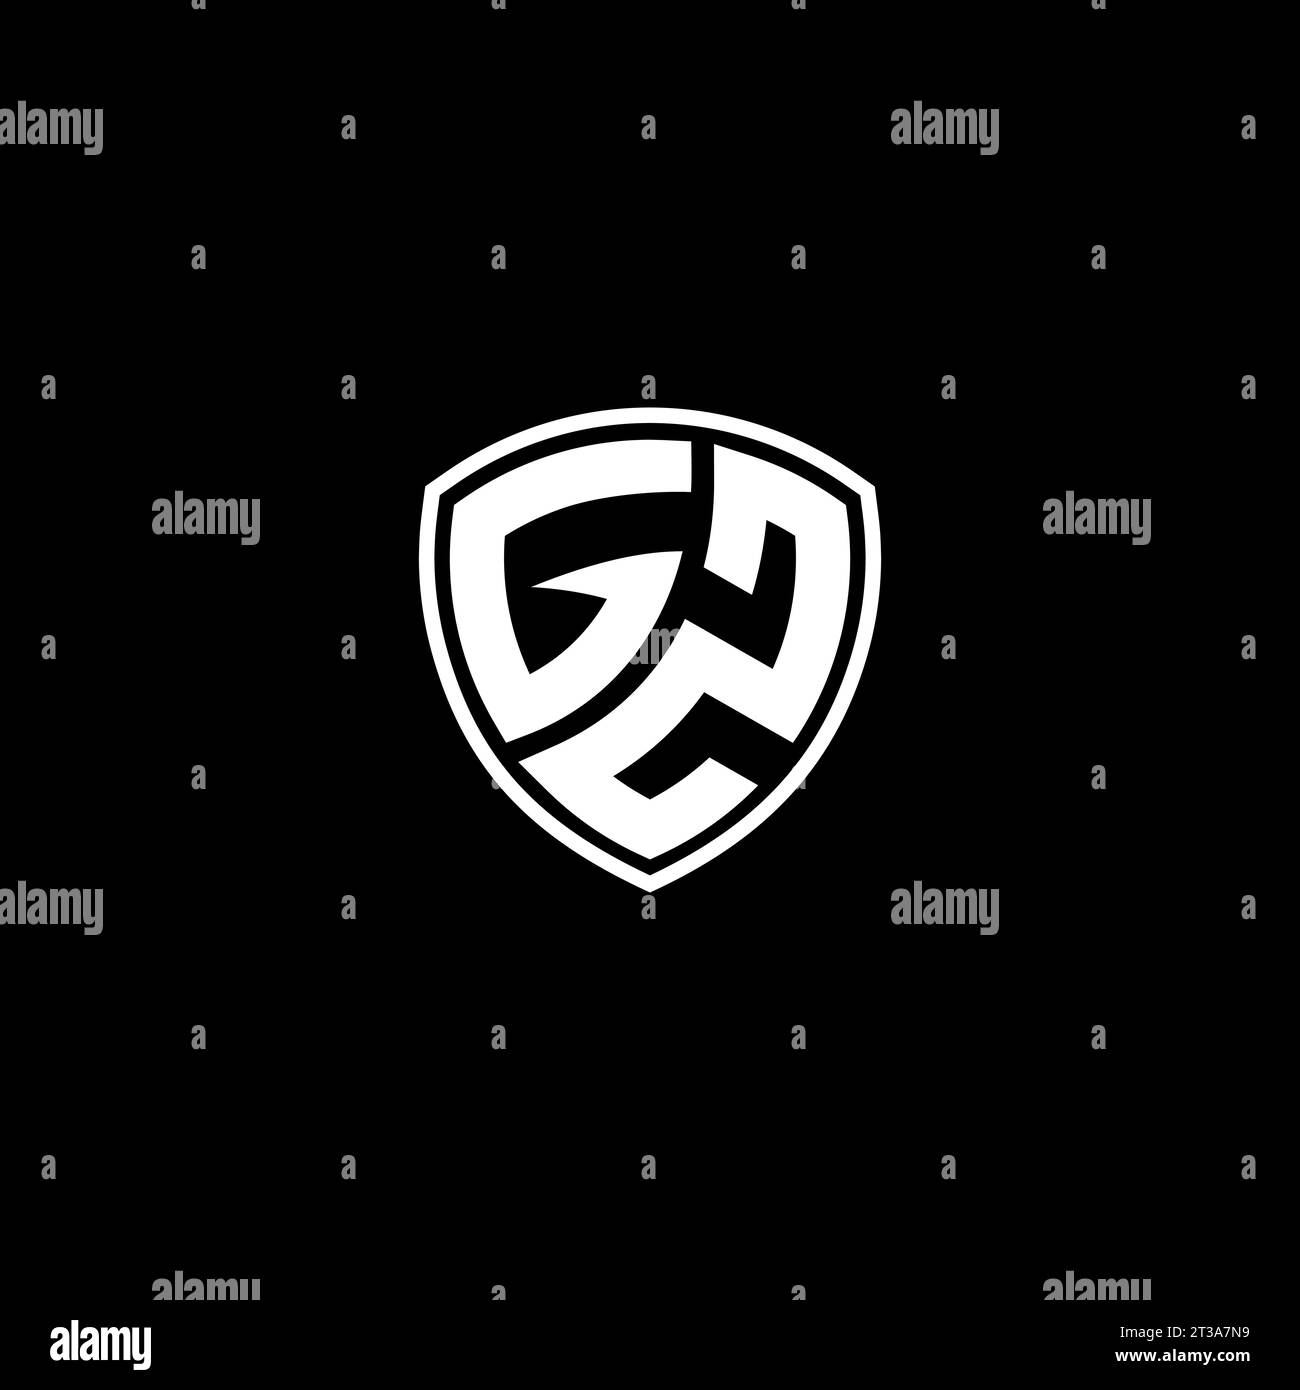 GZ logo monogram emblem style with shield shape design template ideas Stock Vector